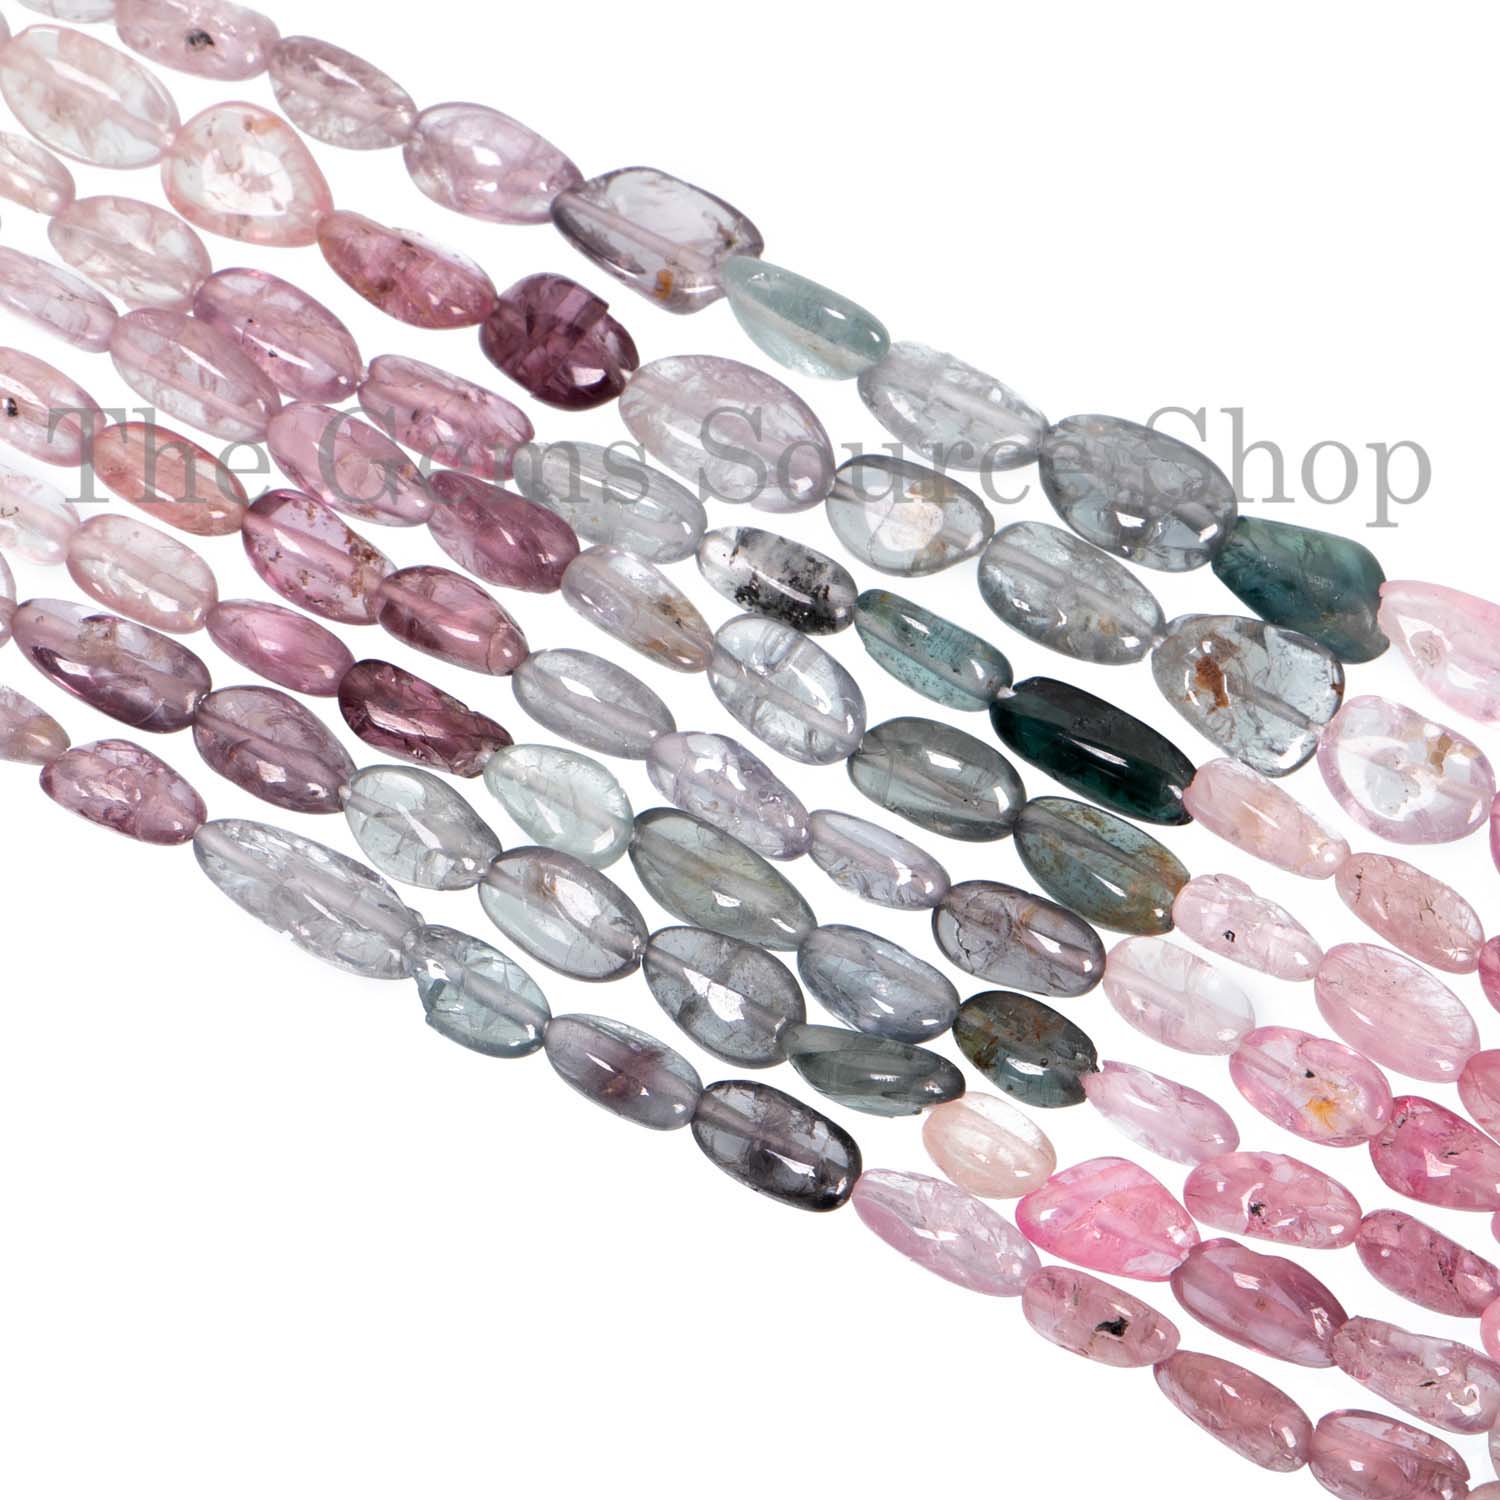 Rare Burma Multi Spinel Oval Shape Beads, Gemstone Beads, Smooth Oval Briolette